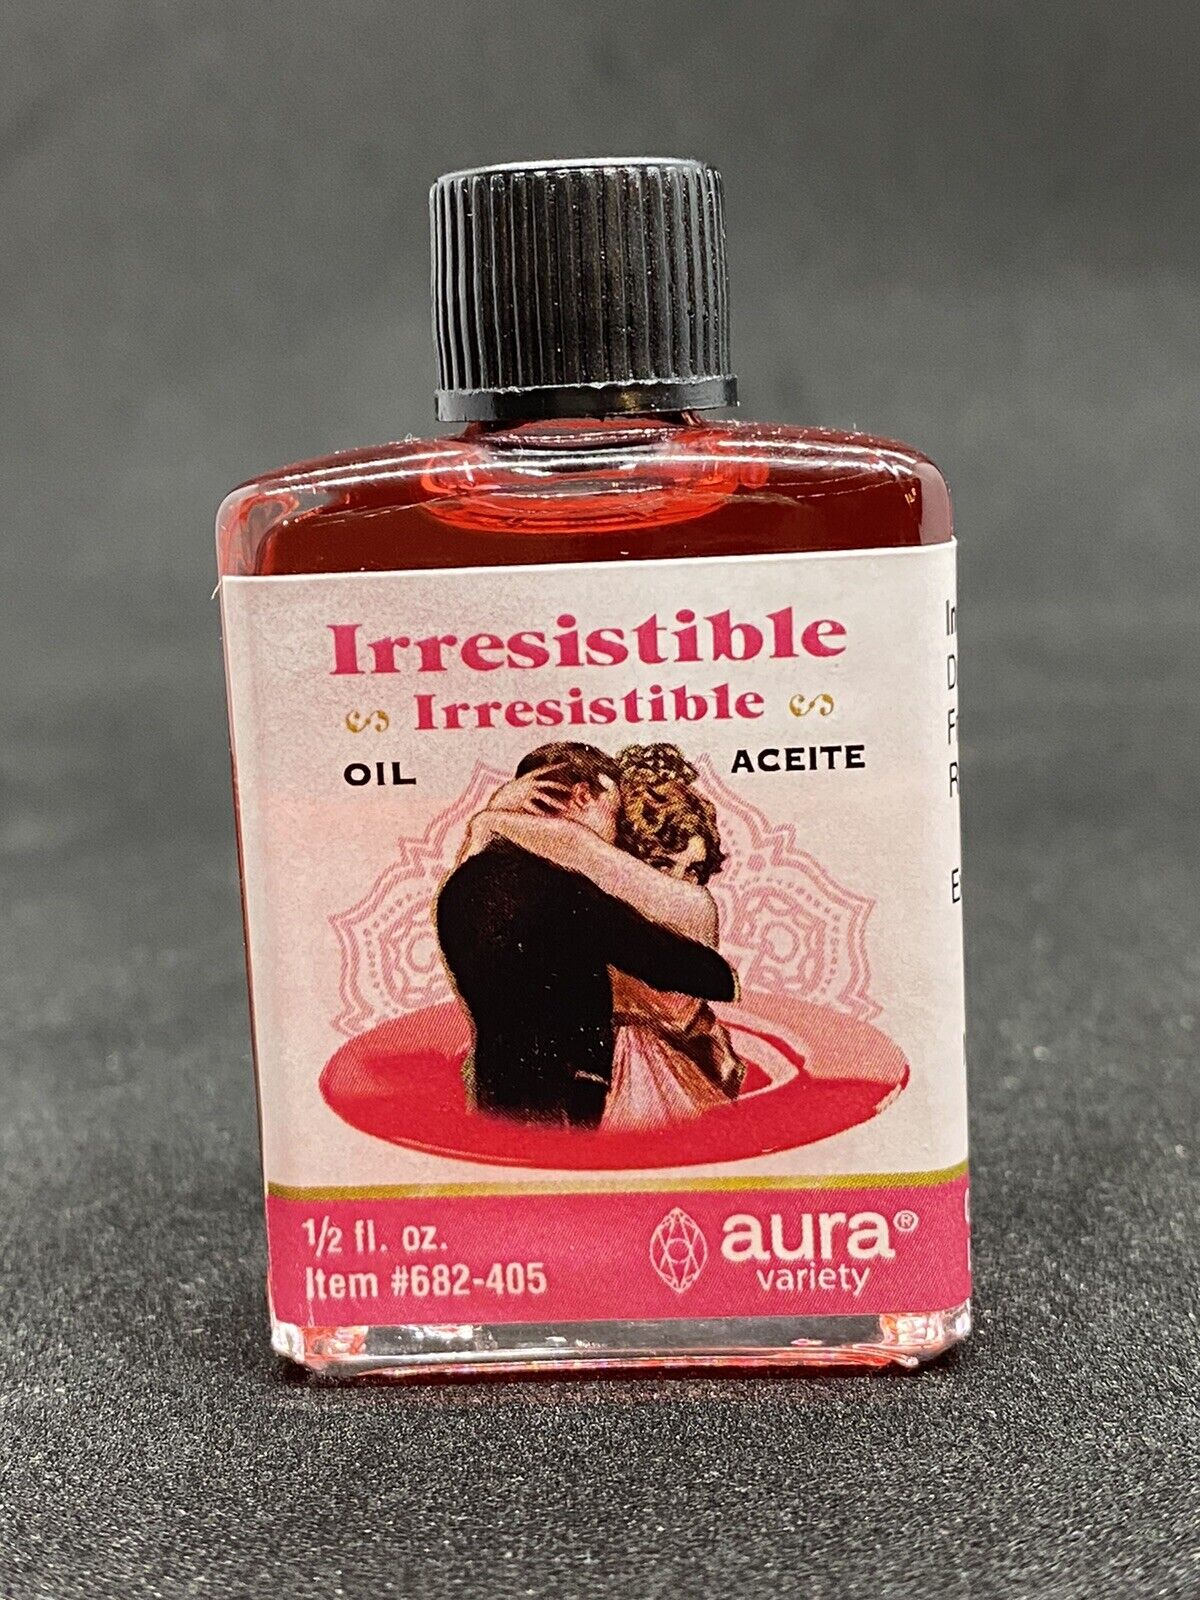 Irresistible Oil